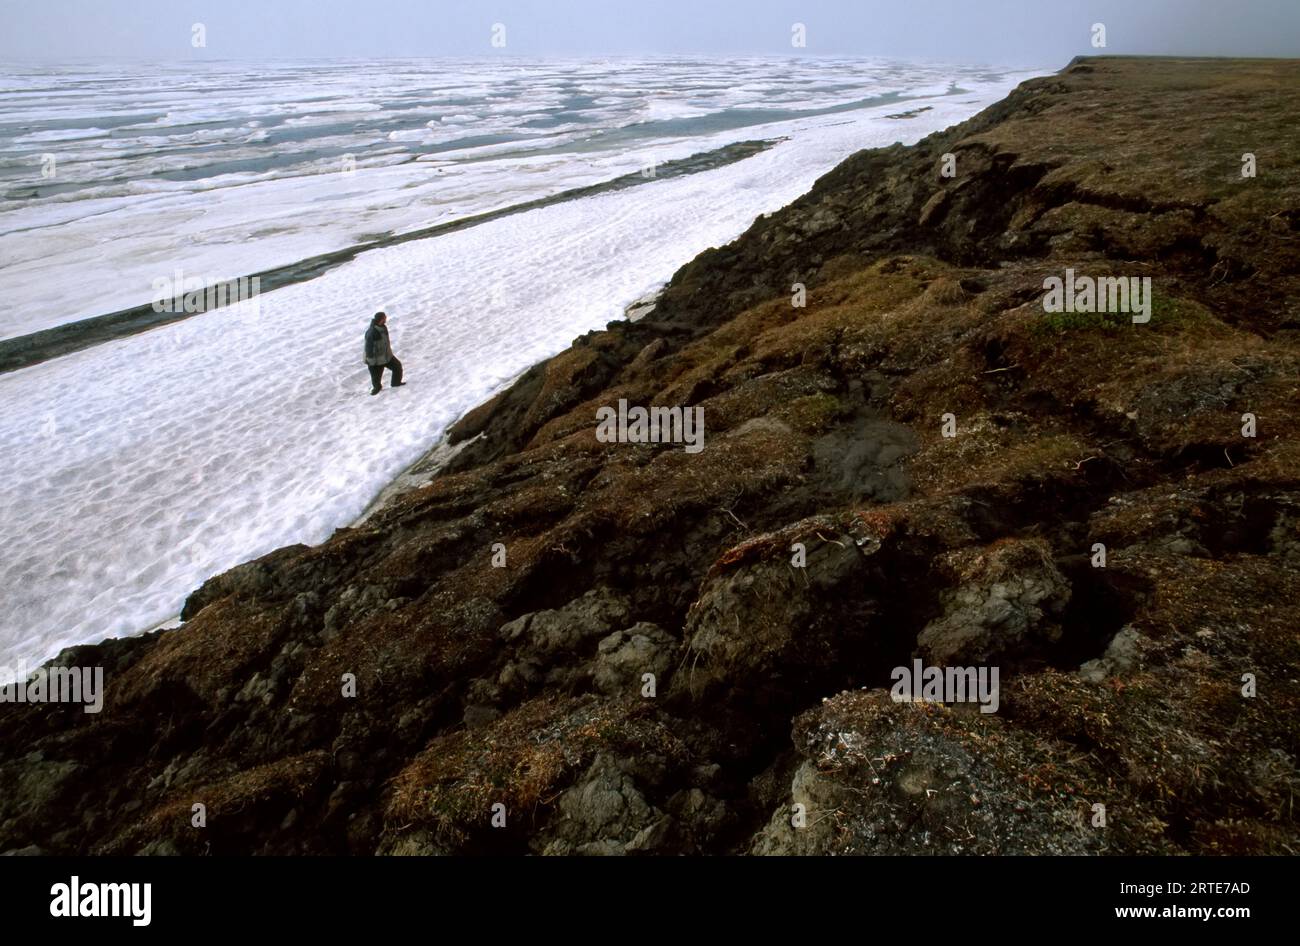 Man walks over melting ice on the rugged tundra; North Slope, Alaska, United States of America Stock Photo